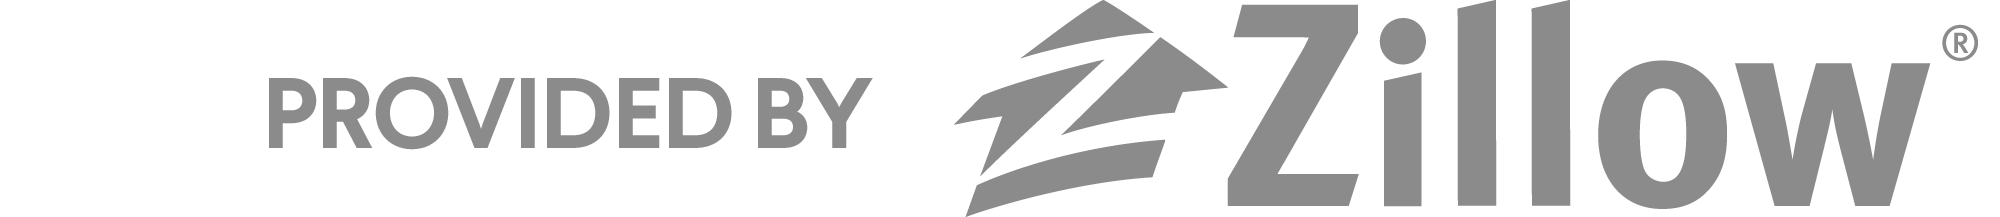 Zillow Review Logo - David Watkins